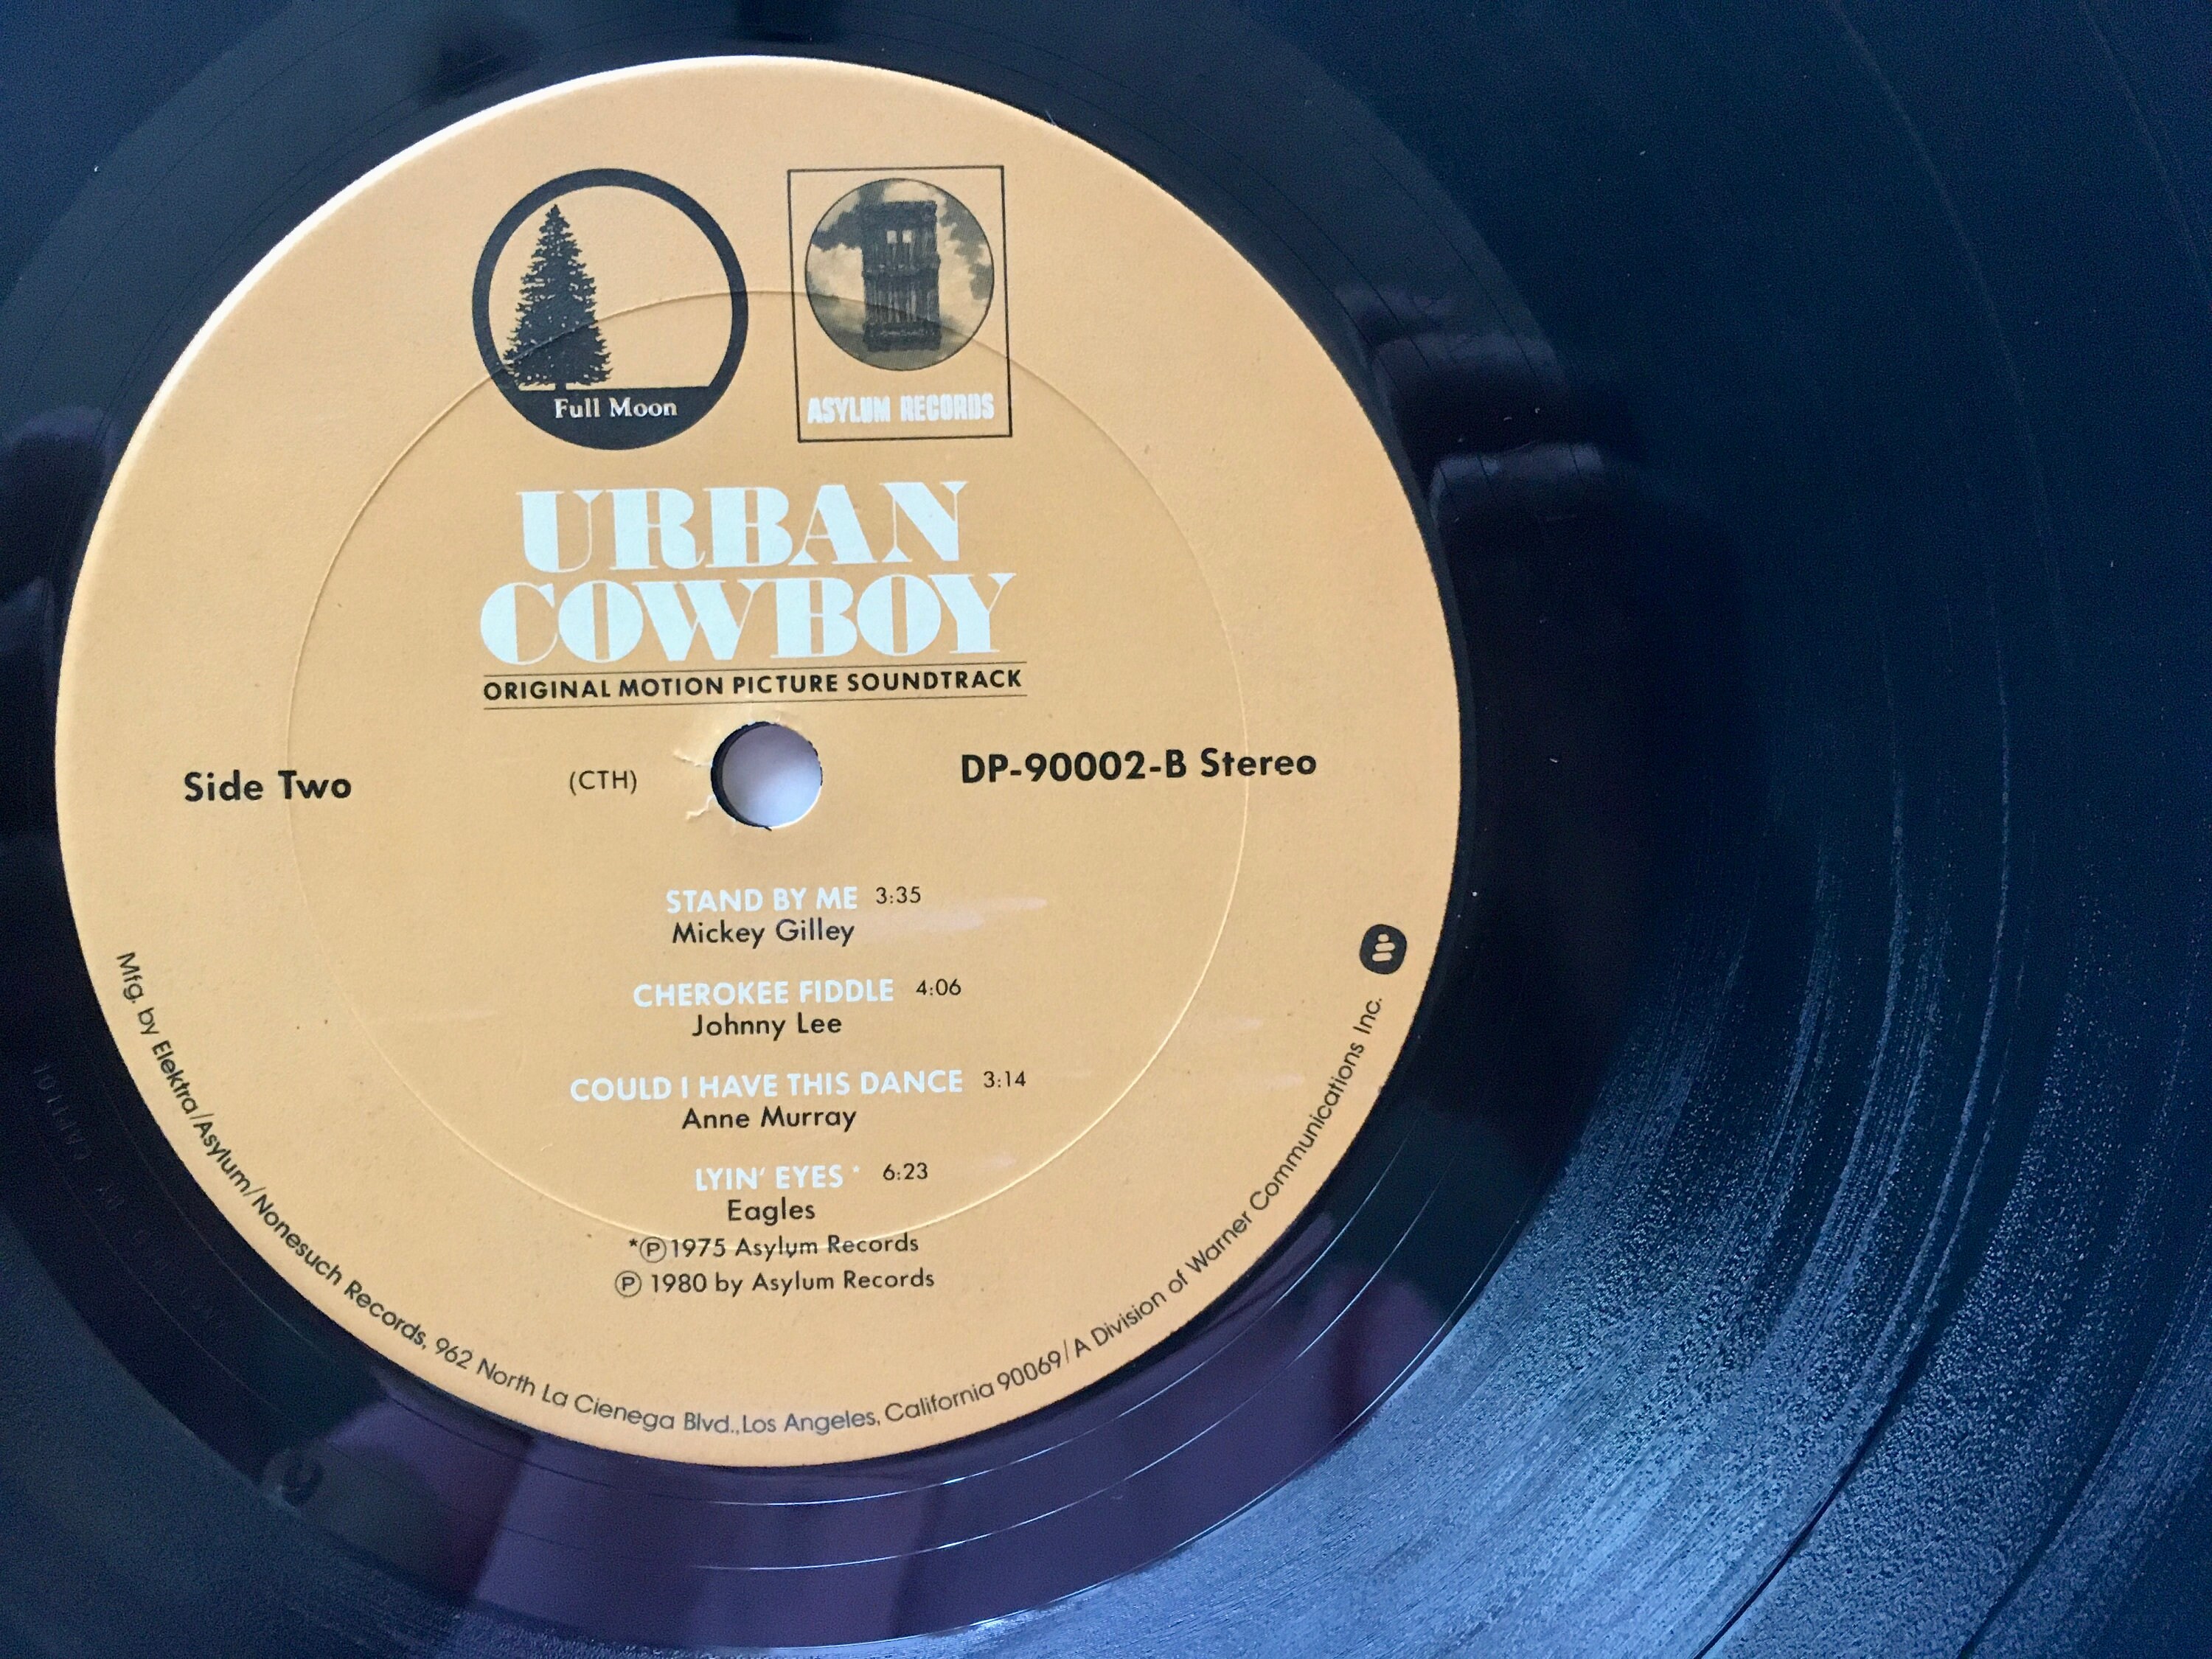 Urban Cowboy Soundtrack Double LP Vinyl Record Album Full - Etsy